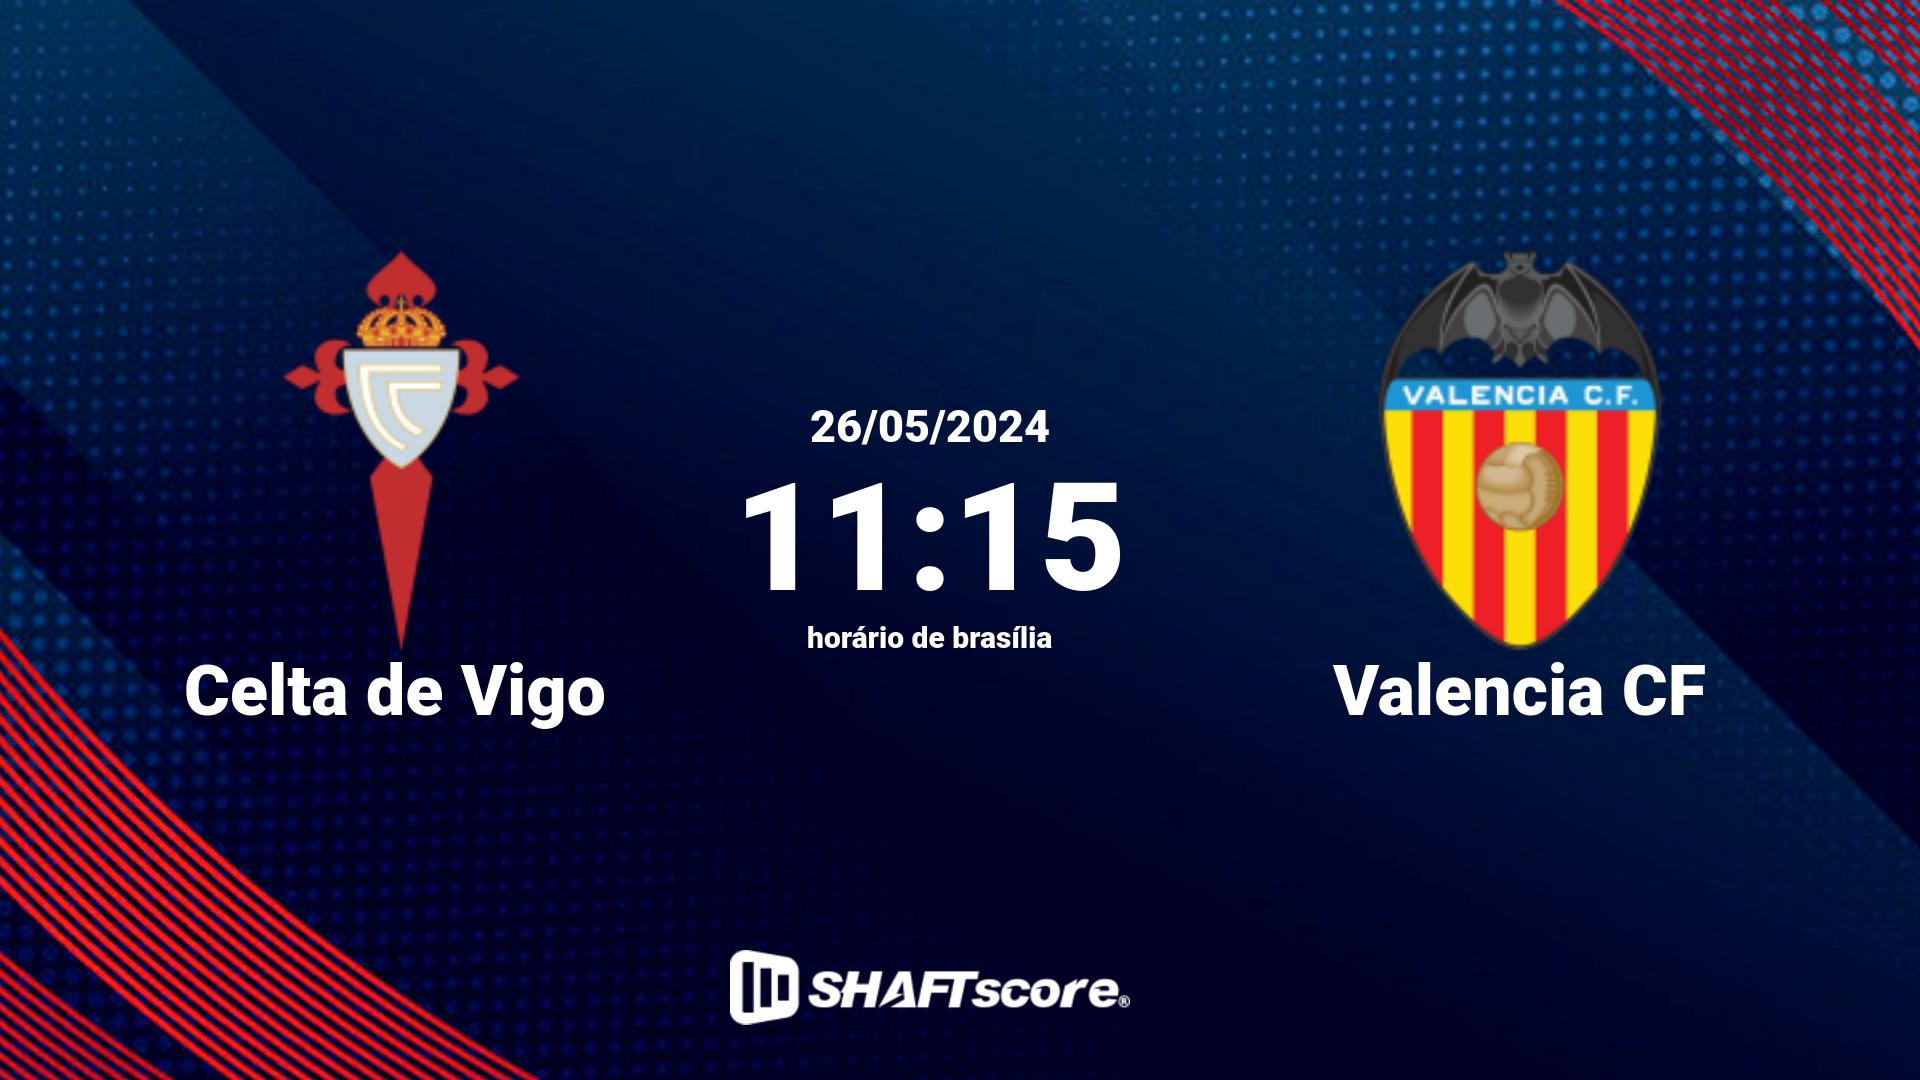 Estatísticas do jogo Celta de Vigo vs Valencia CF 26.05 11:15